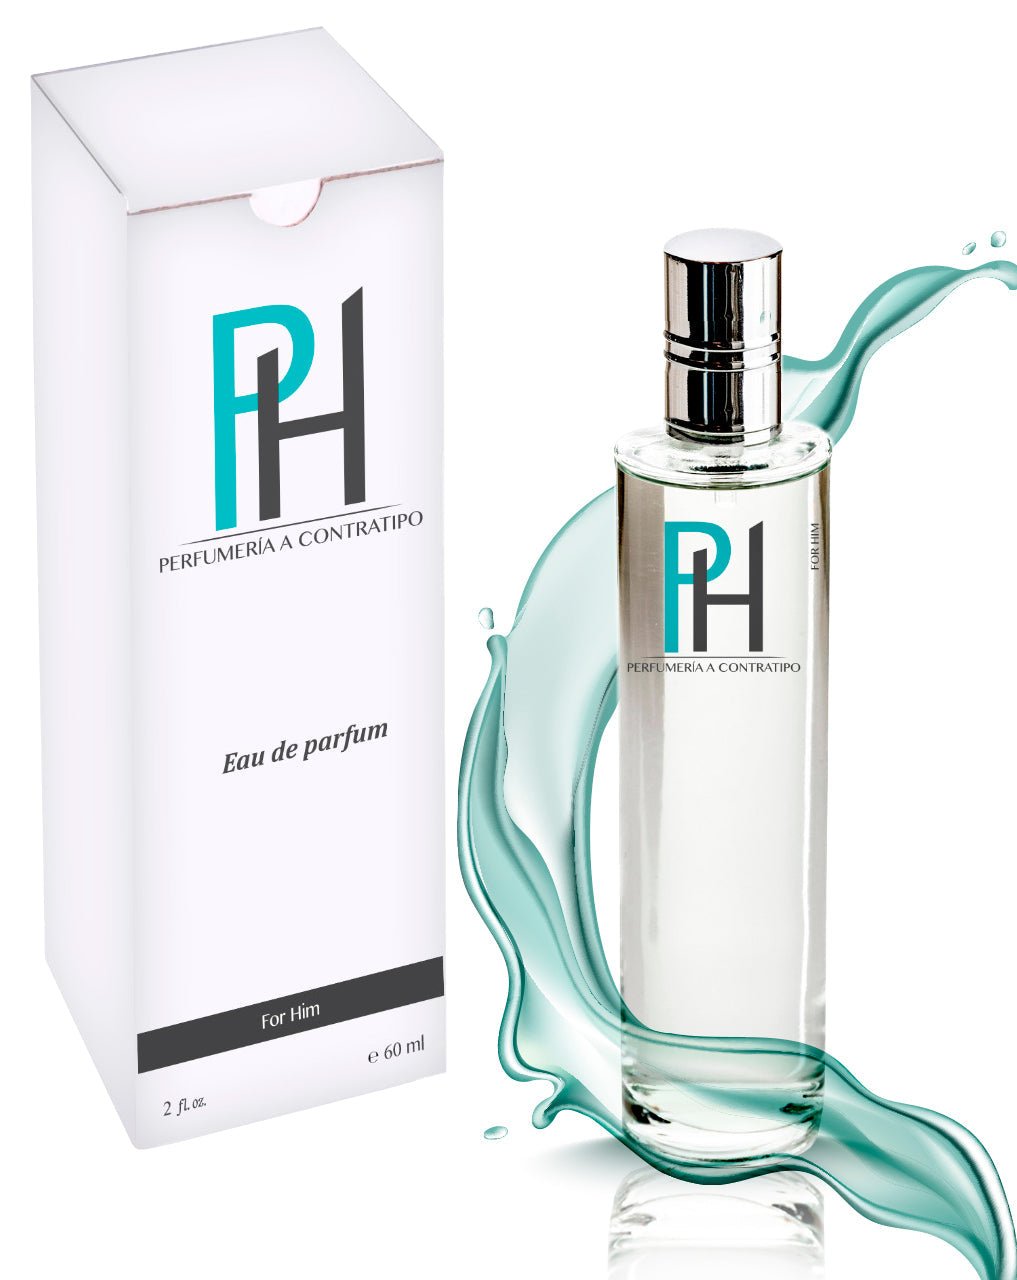 Perfume Allure Blanche De 60 ml - PH Perfumería a Contratipo